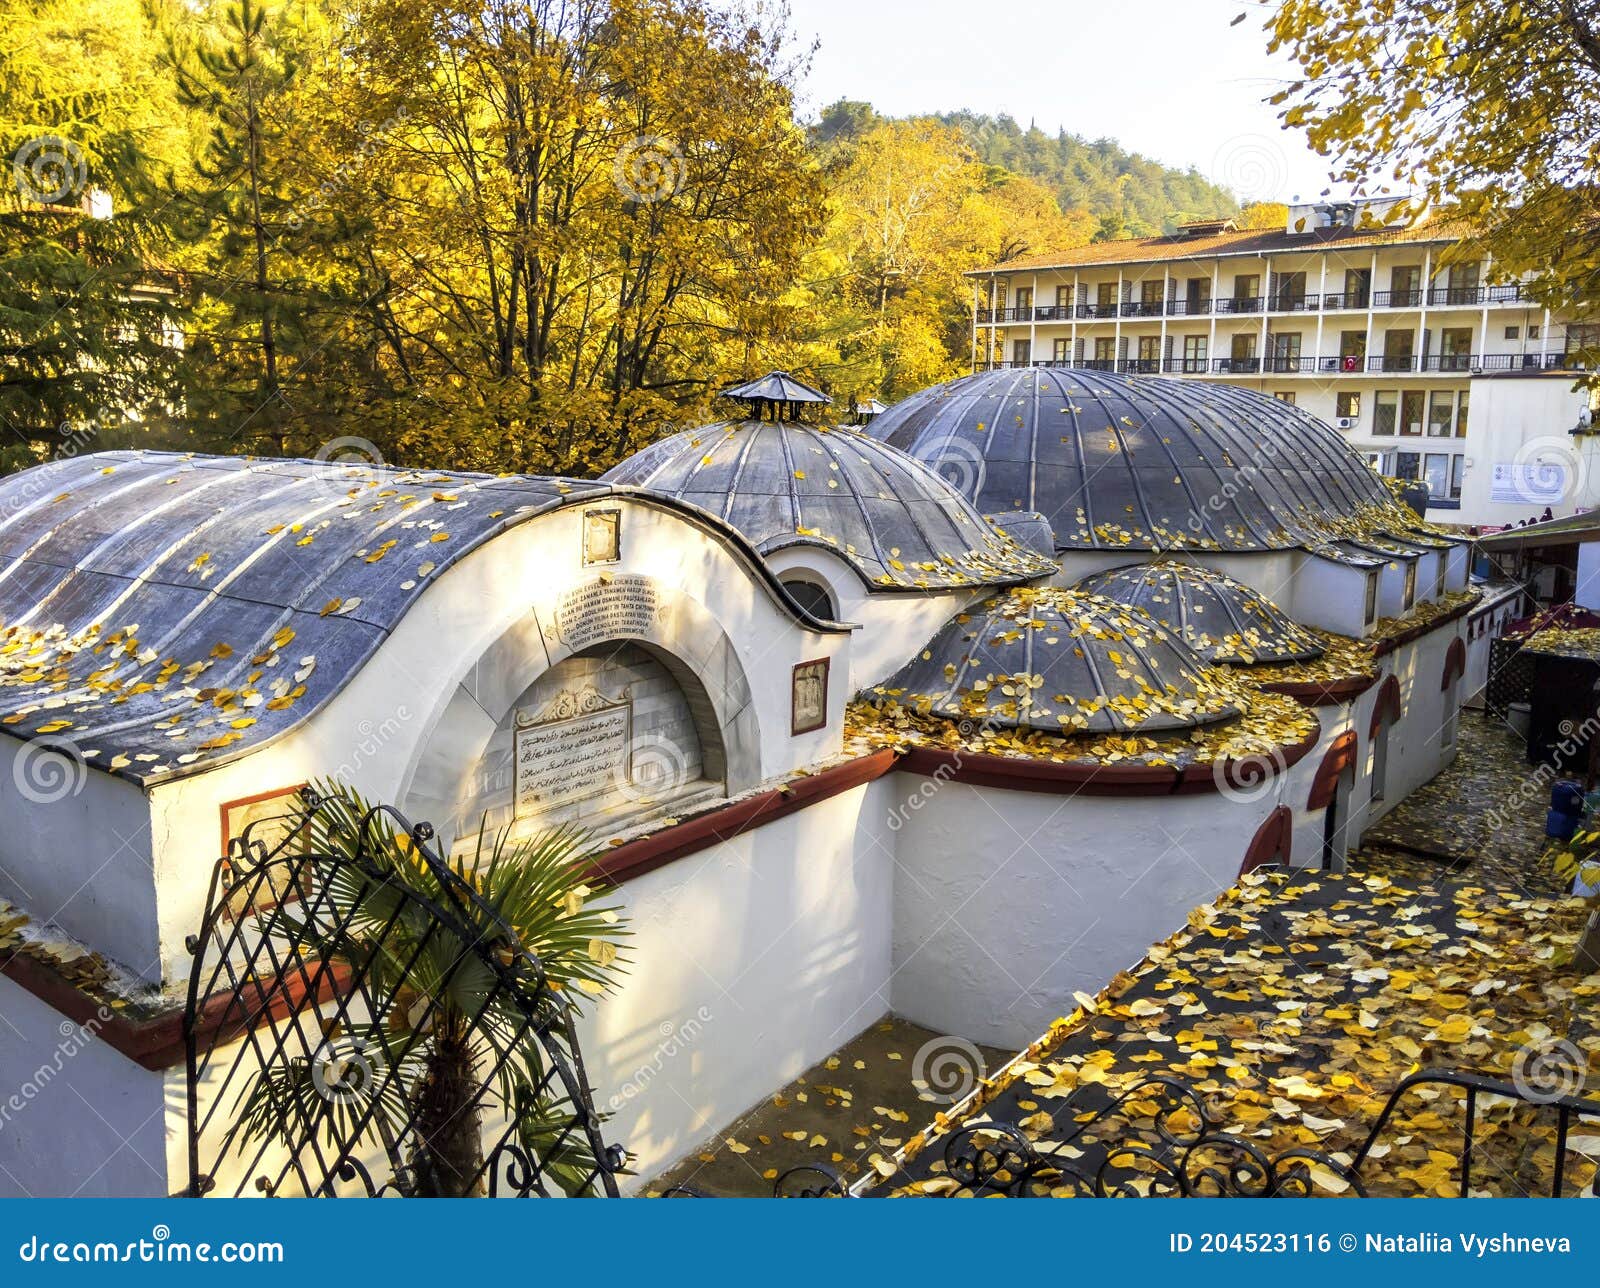 termal park, hotel and baths view in termal, yalova, popular thermal spring spa in turkey in autumn.jpg